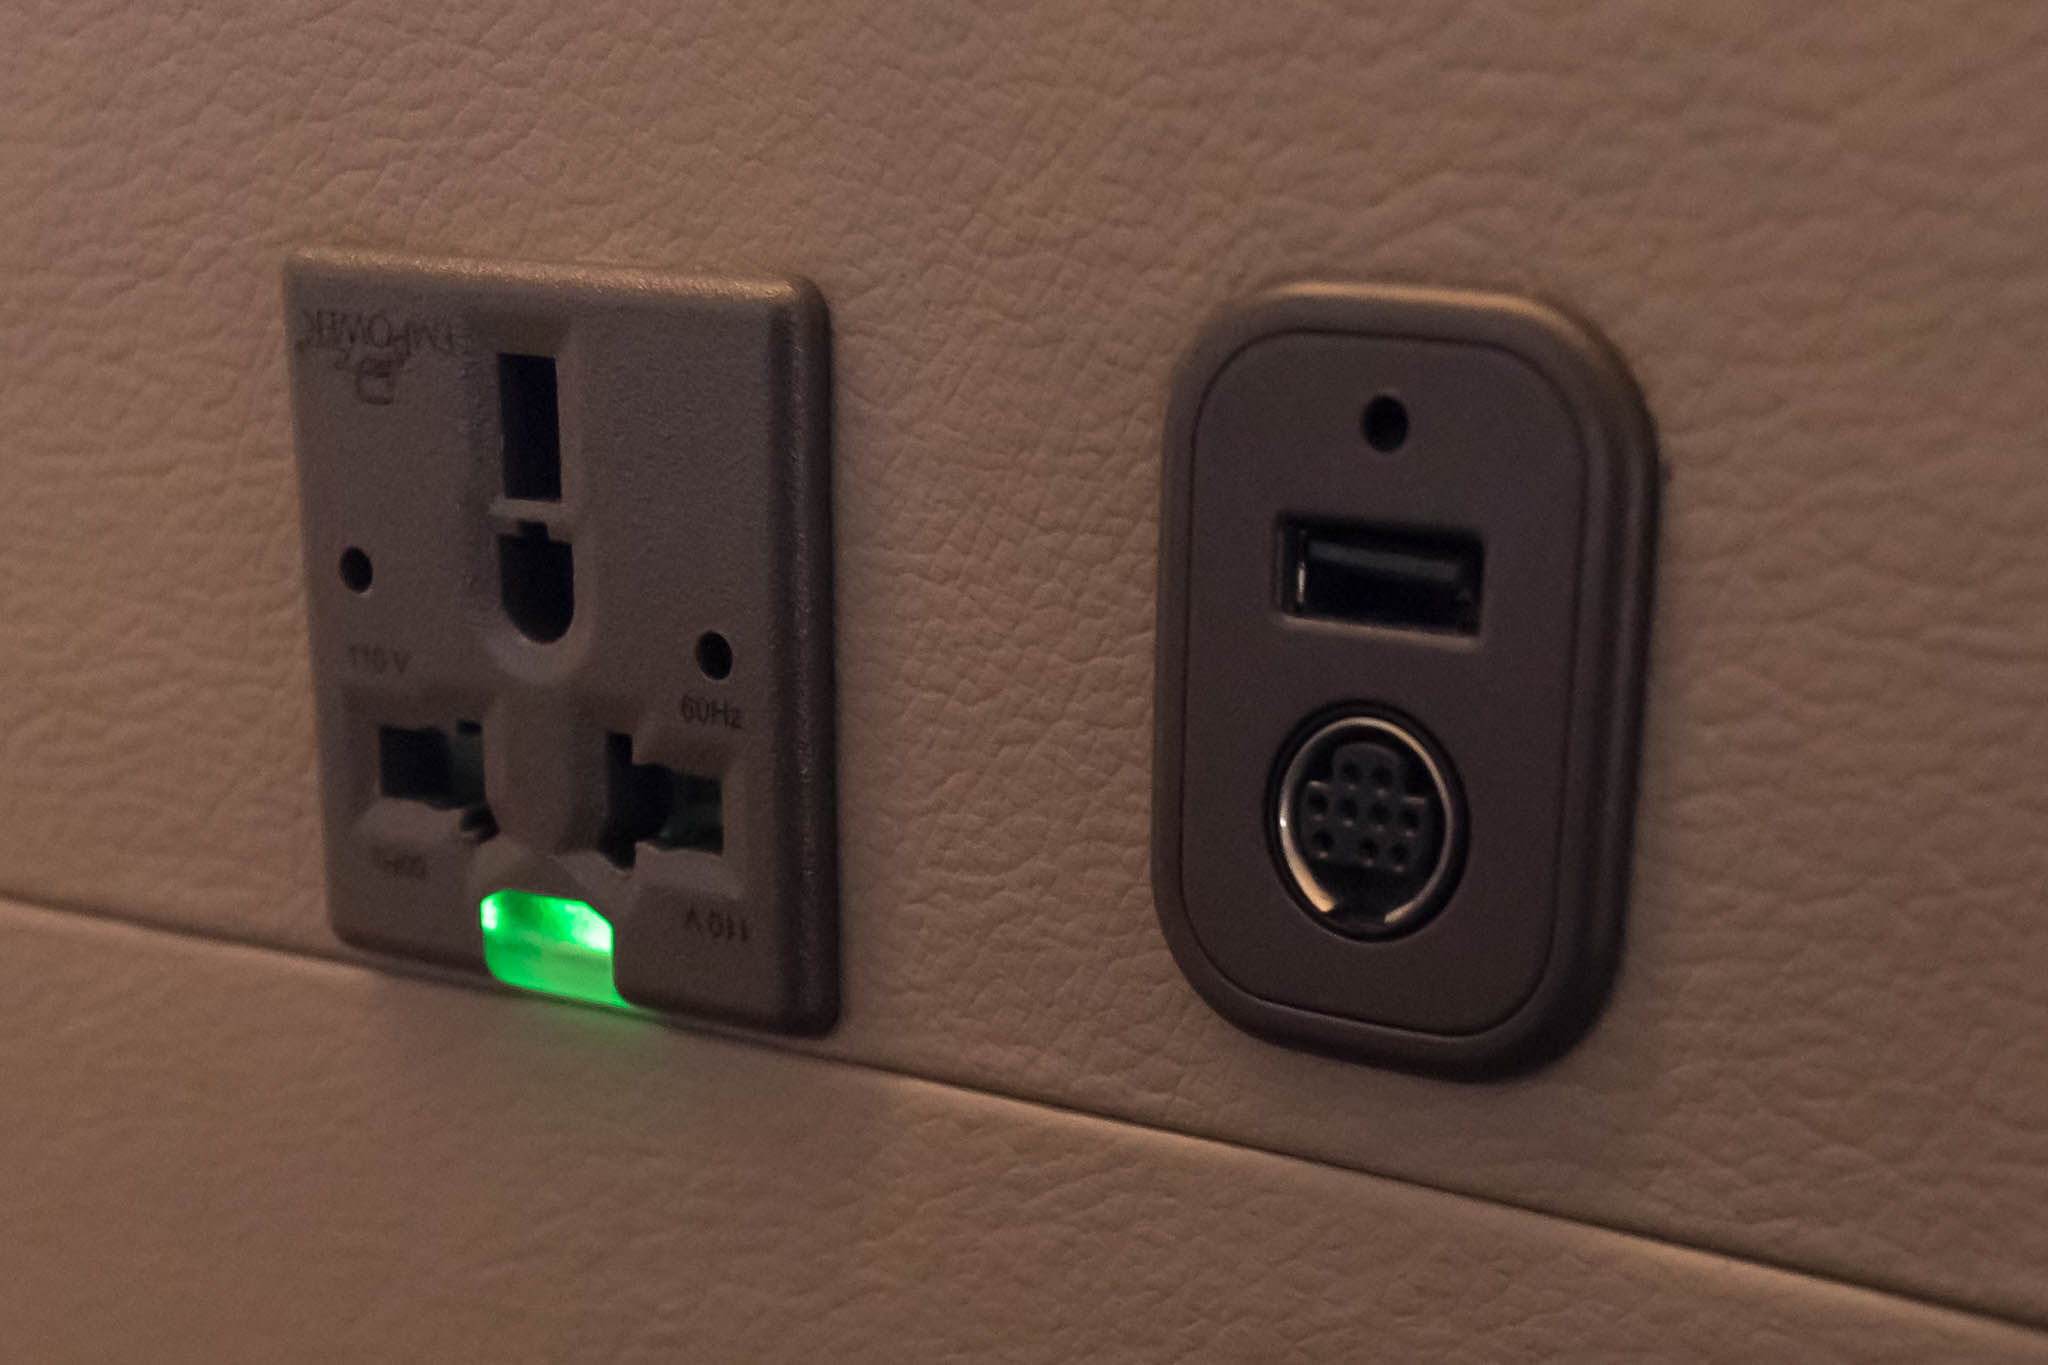 a close up of a plug and socket